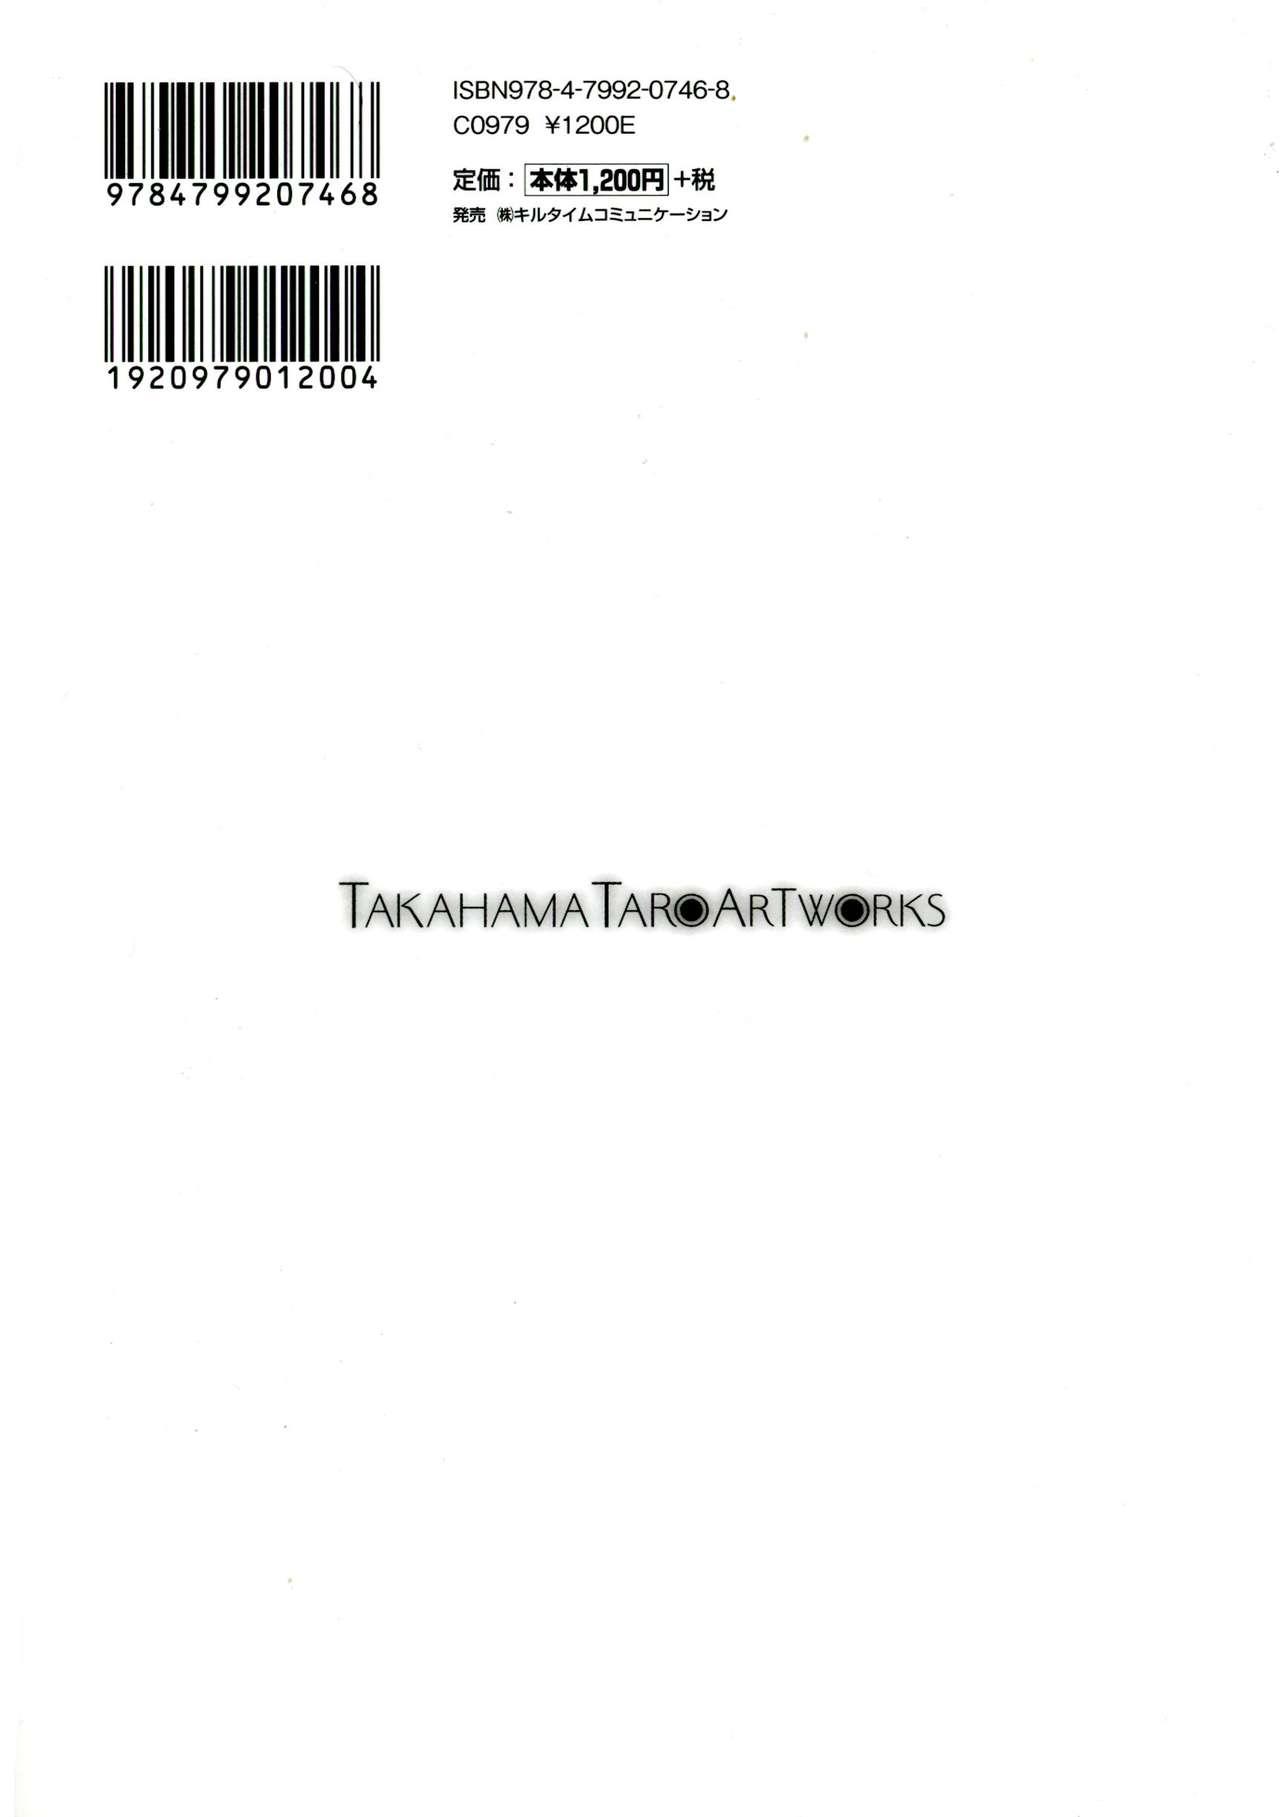 Takahama Taro Artworks 1